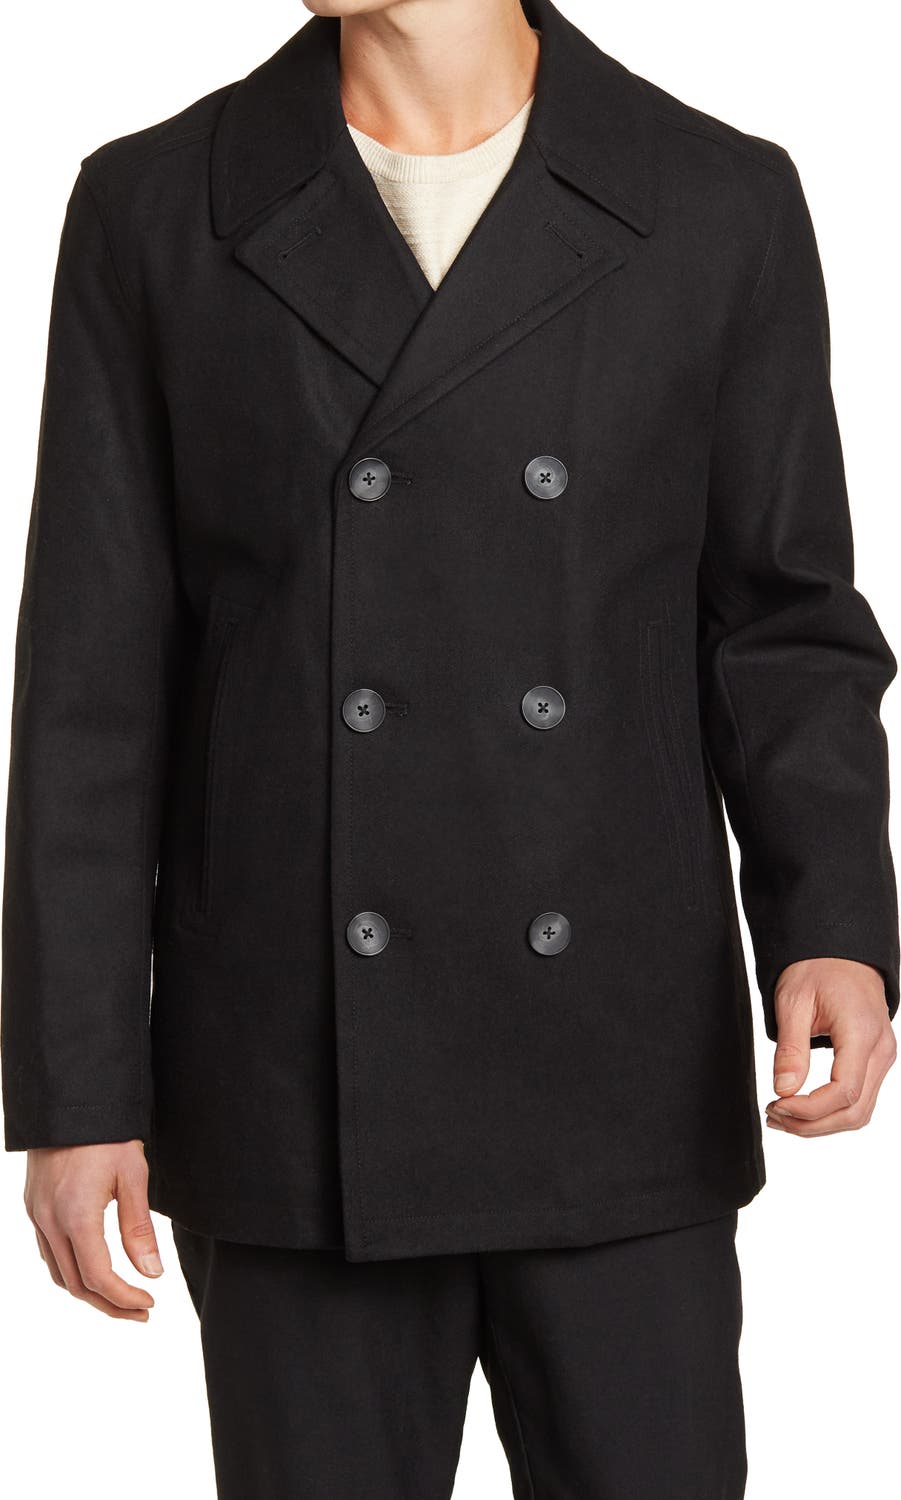 Nautica Men's Coats: Wool Blend Peacoat (Black) $40, Water Resistant Wool Blend Coat (Black) $40 & More + Free Shipping on $89+